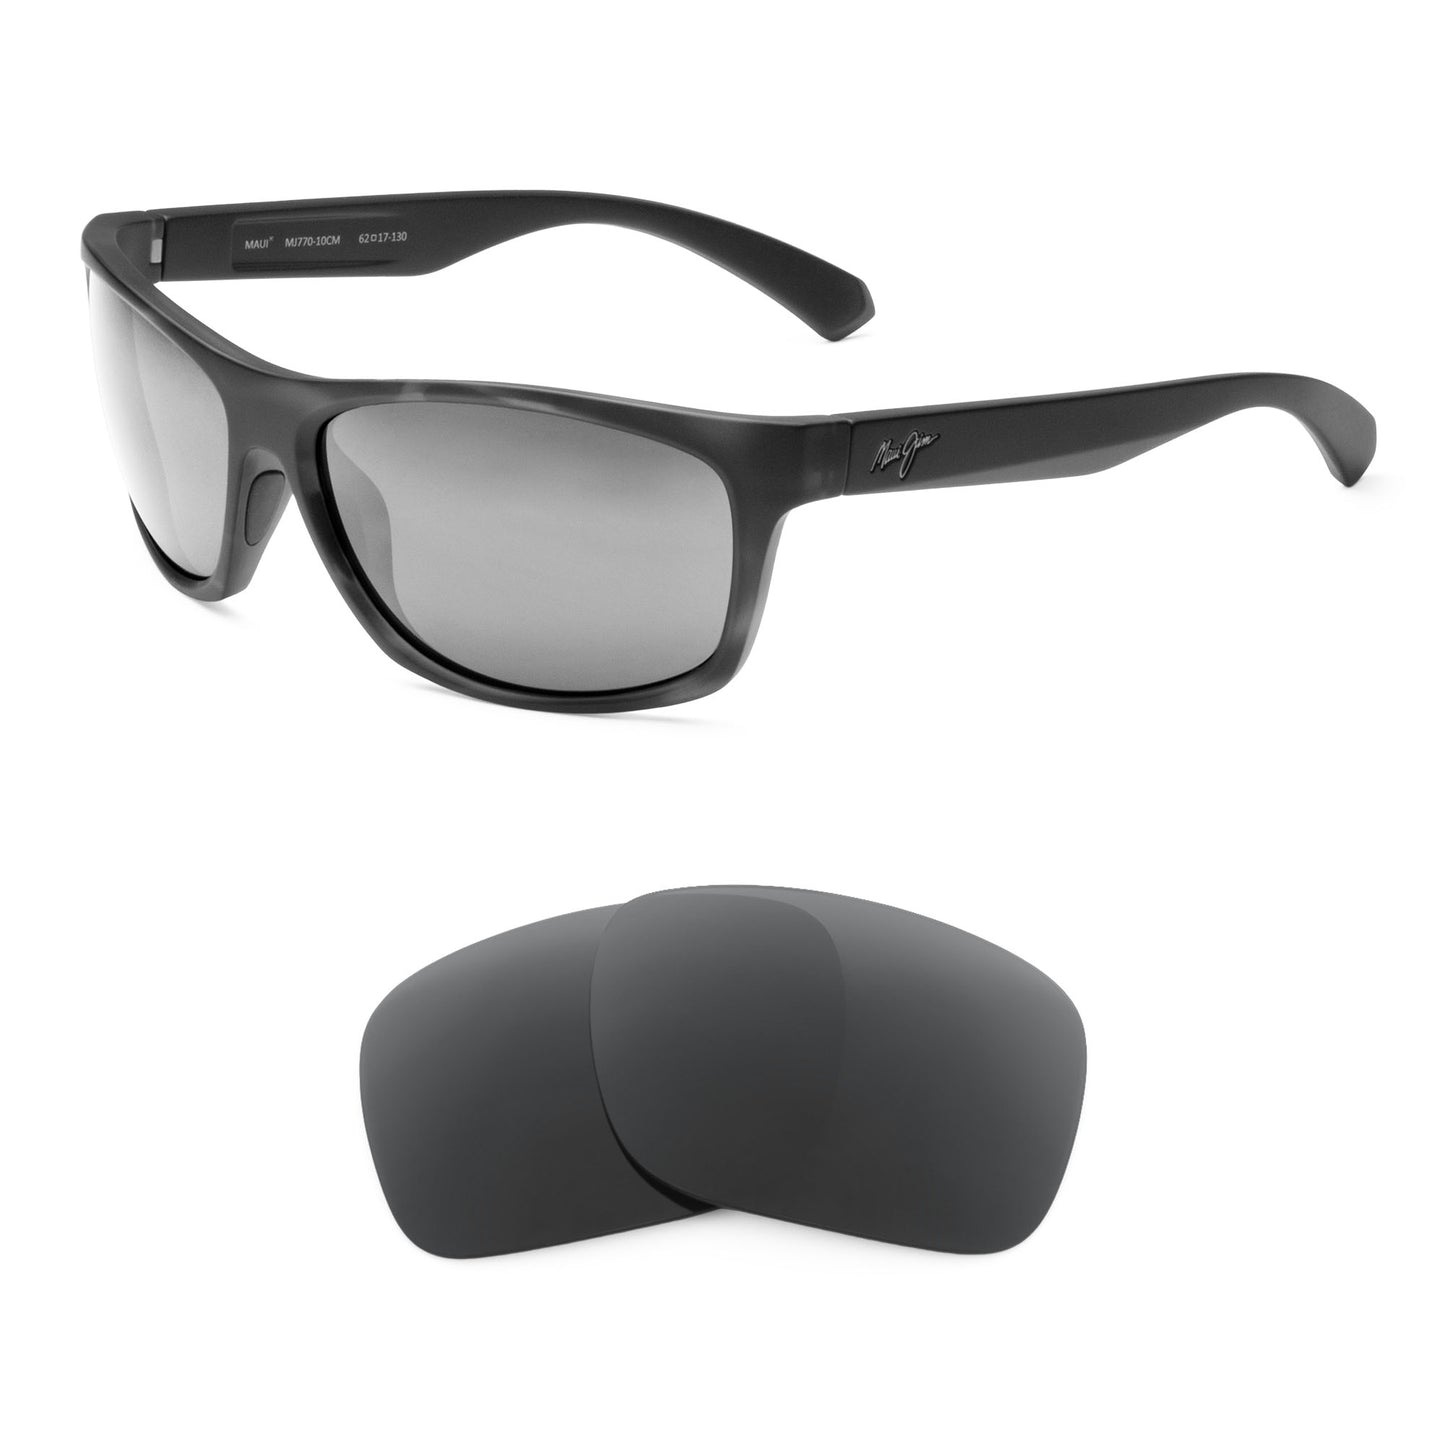 Maui Jim Tumbleland MJ770 sunglasses with replacement lenses